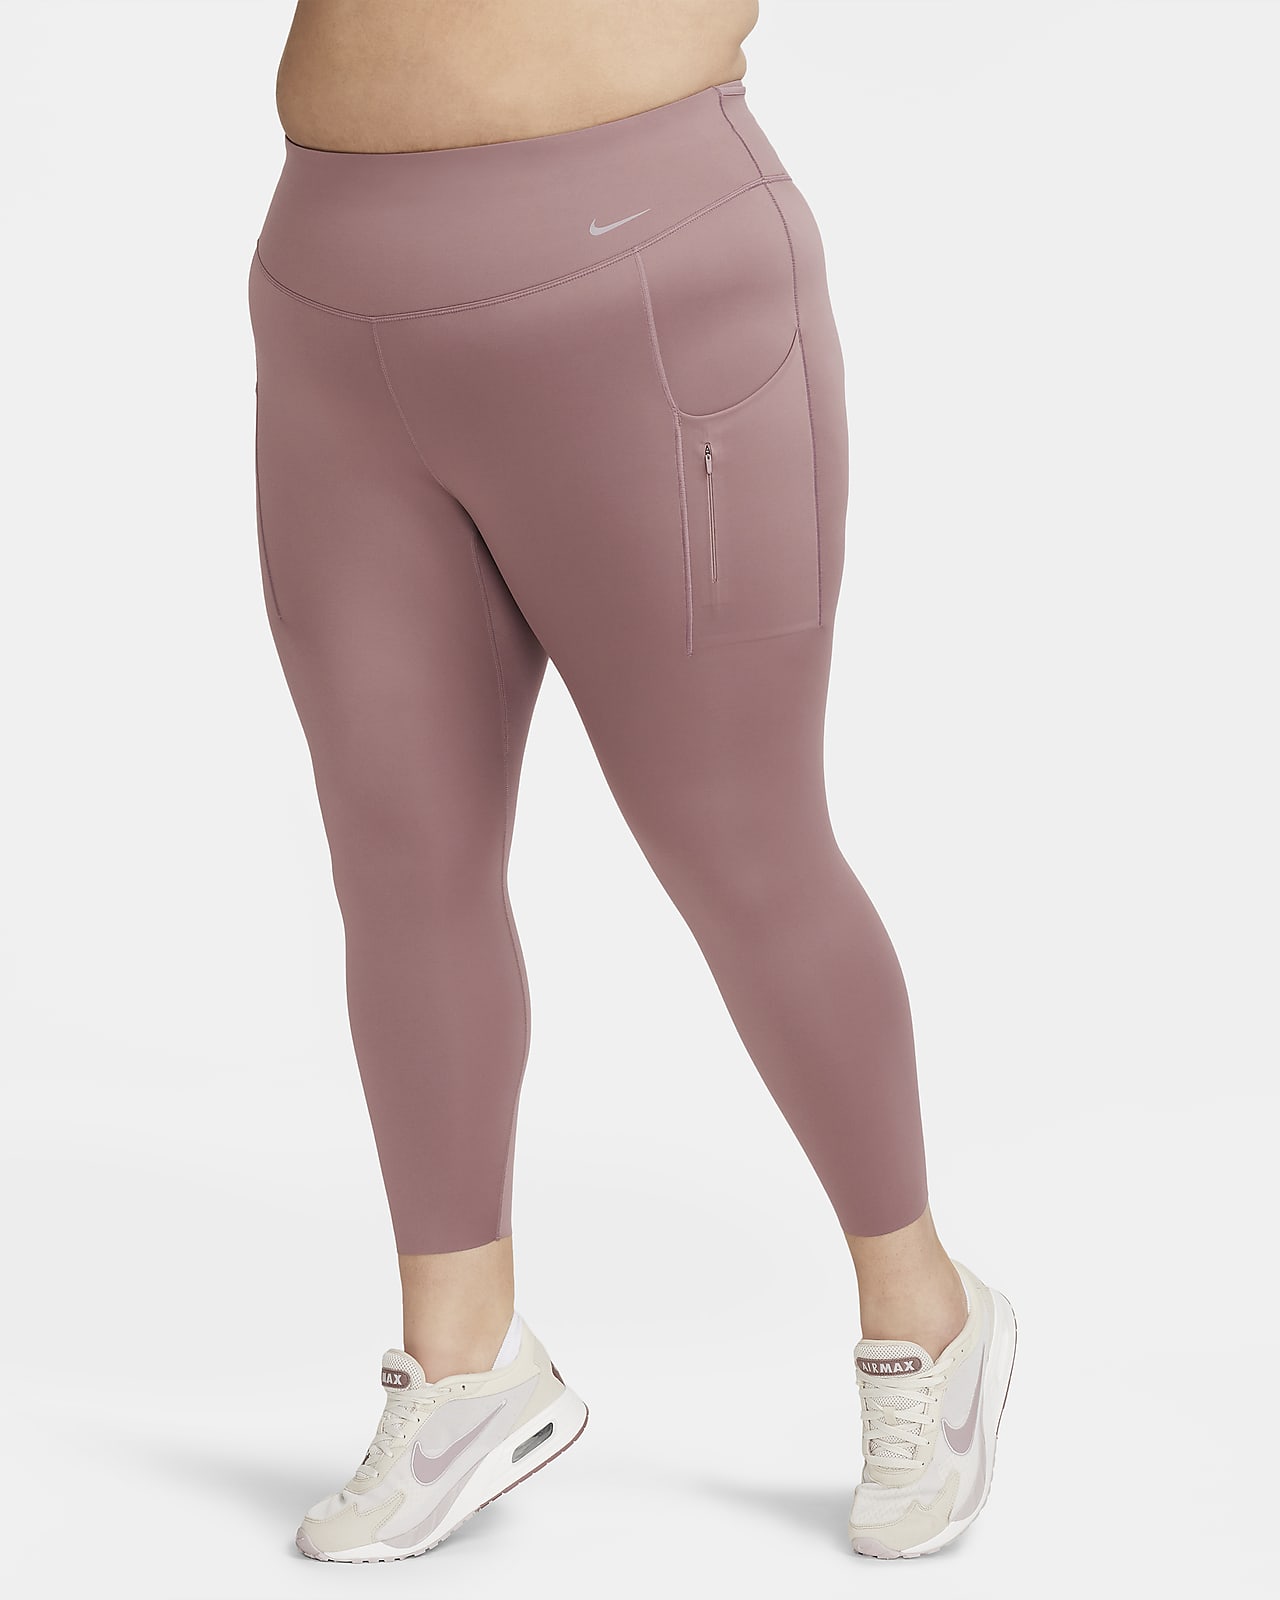 Women Nike Firm-Support High-Waisted 7/8 Leggings Pocket Purple